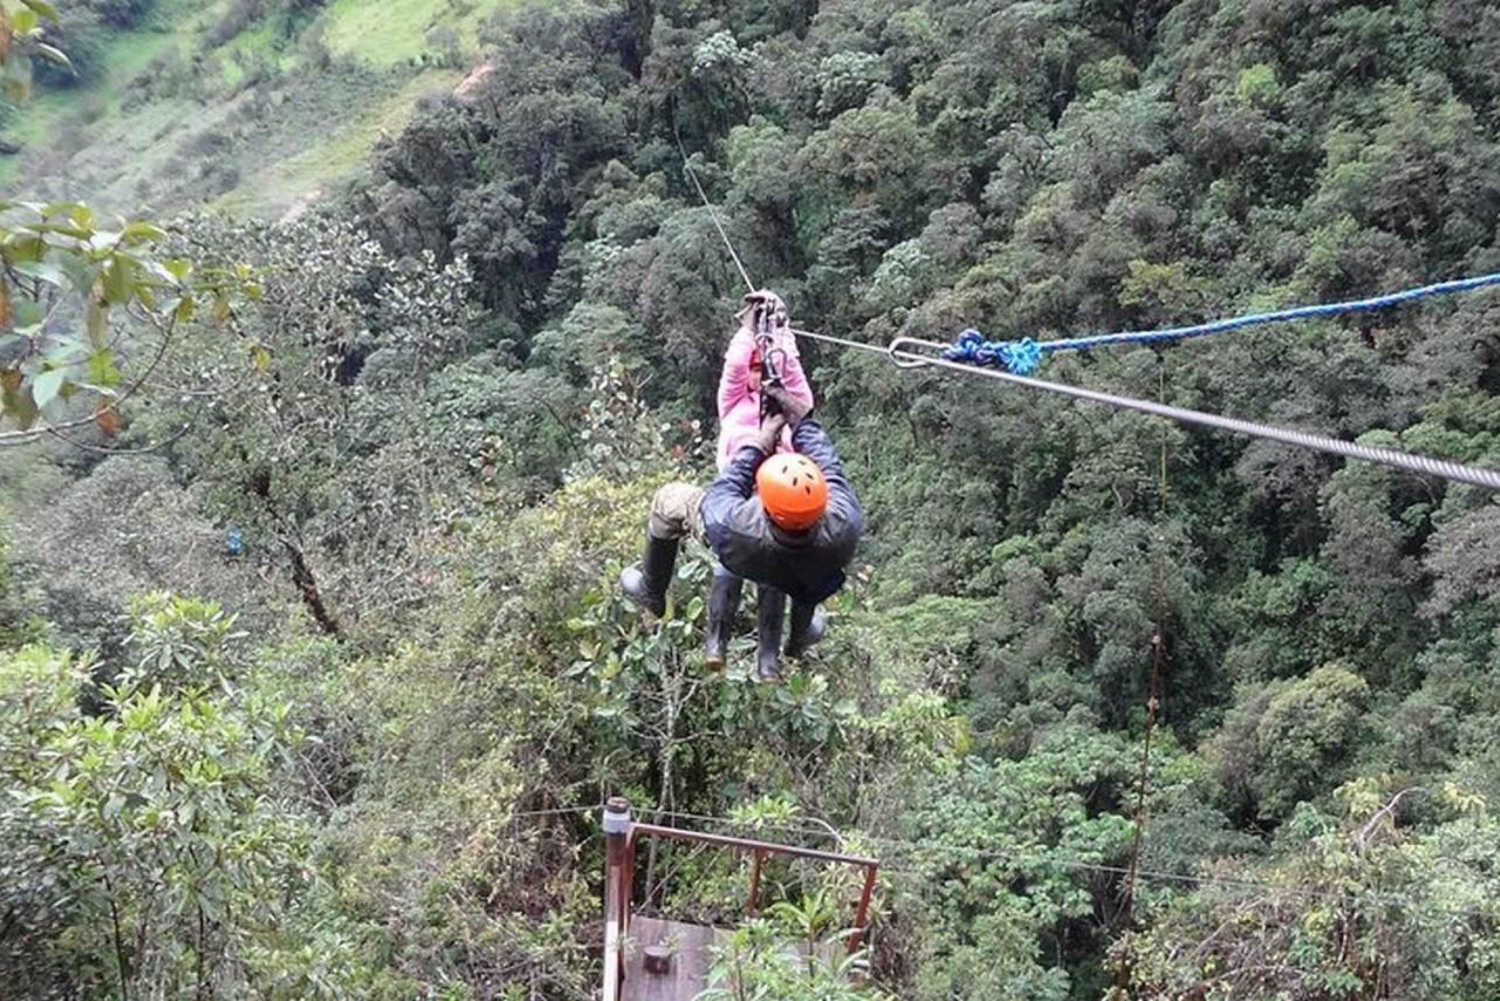 Baños: Ziplining z baldachimem w Puntzan Adventure Park